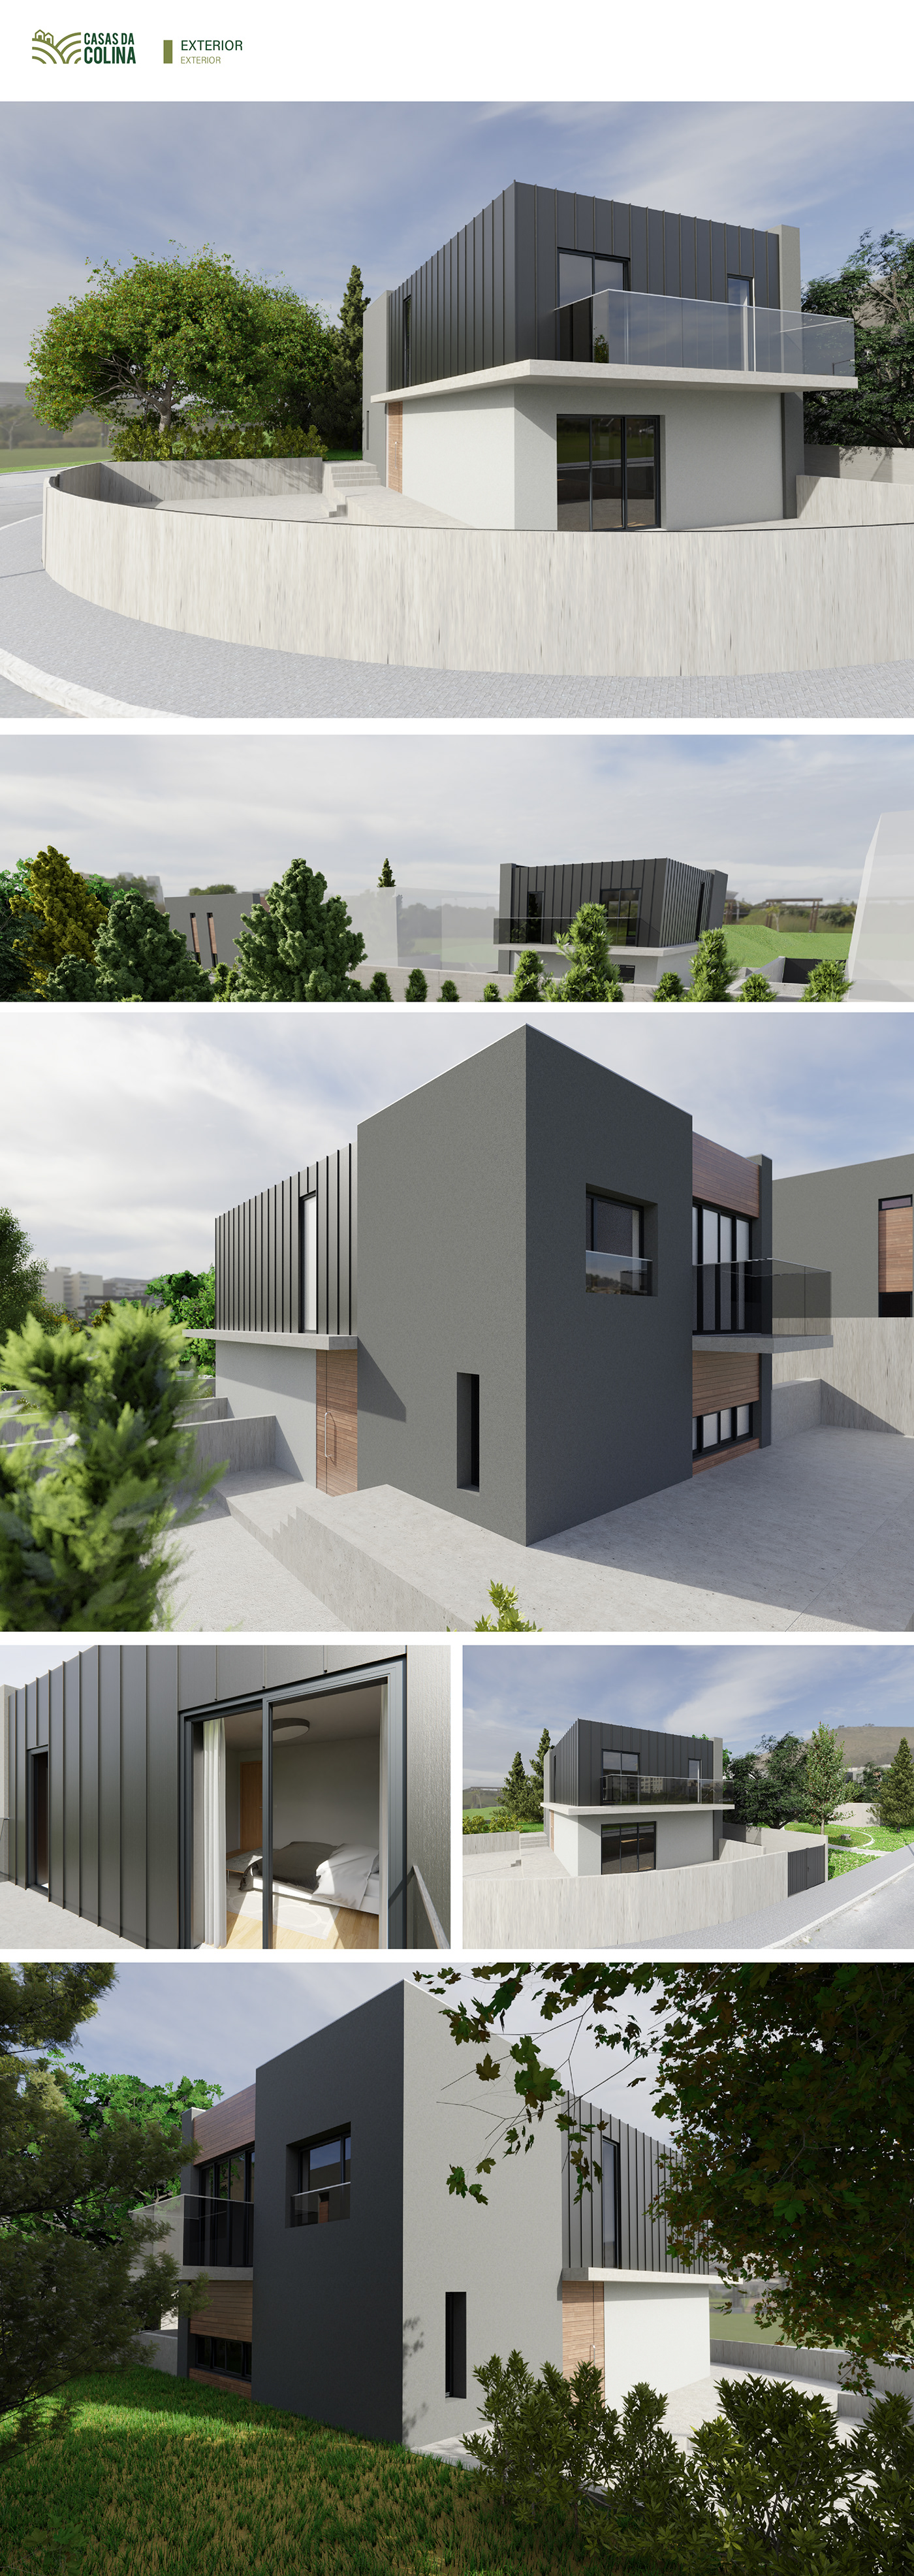 CASAS house housing 3D arquitecture arquitectura blender 3d colina casa